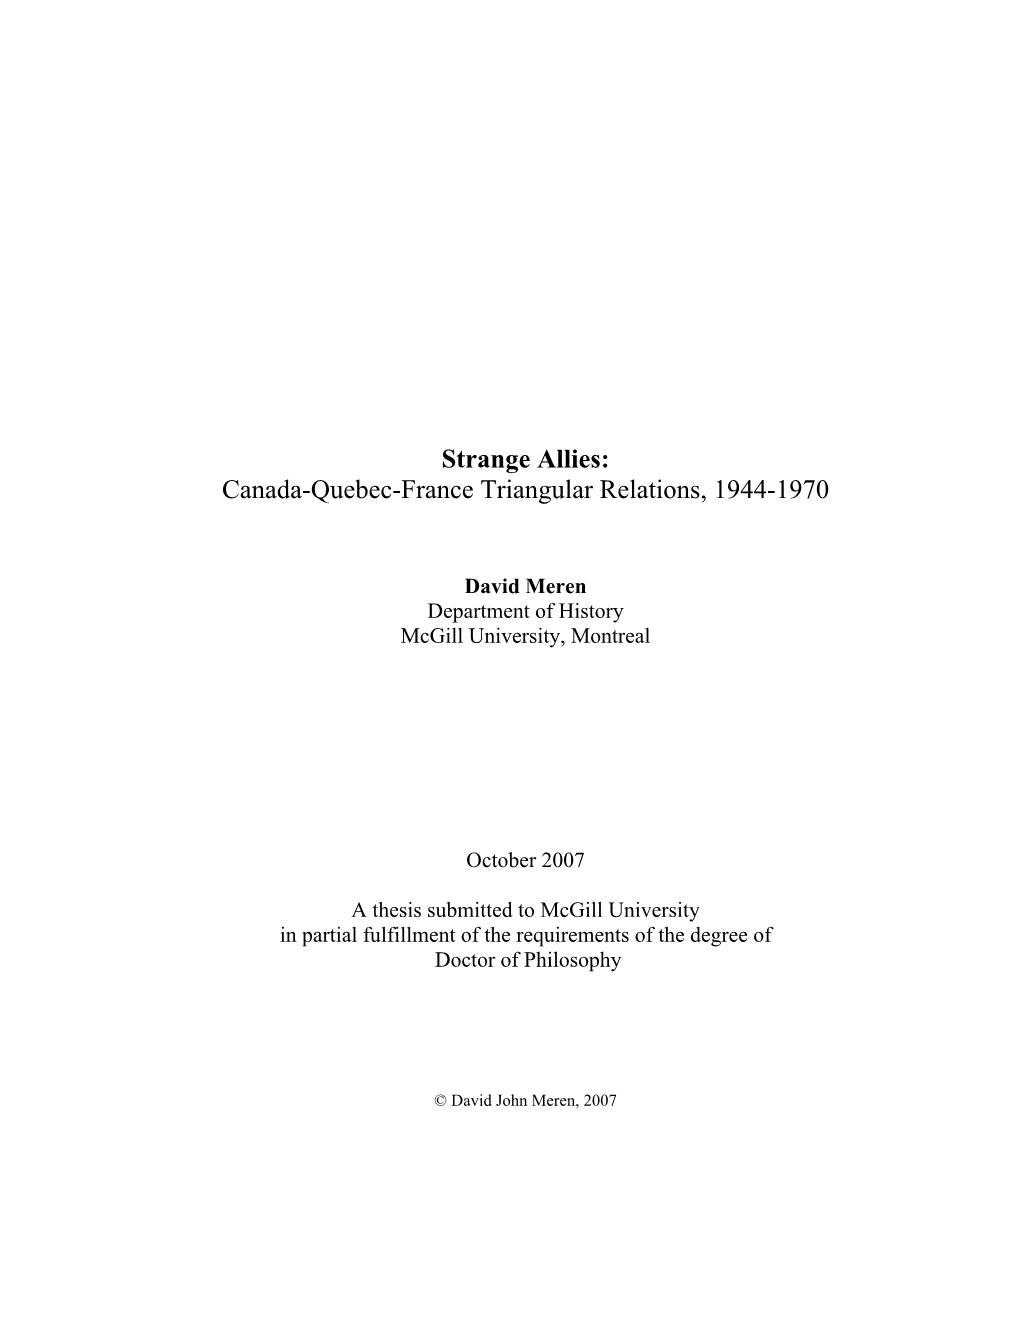 Canada-Quebec-France Triangular Relations, 1944-1970